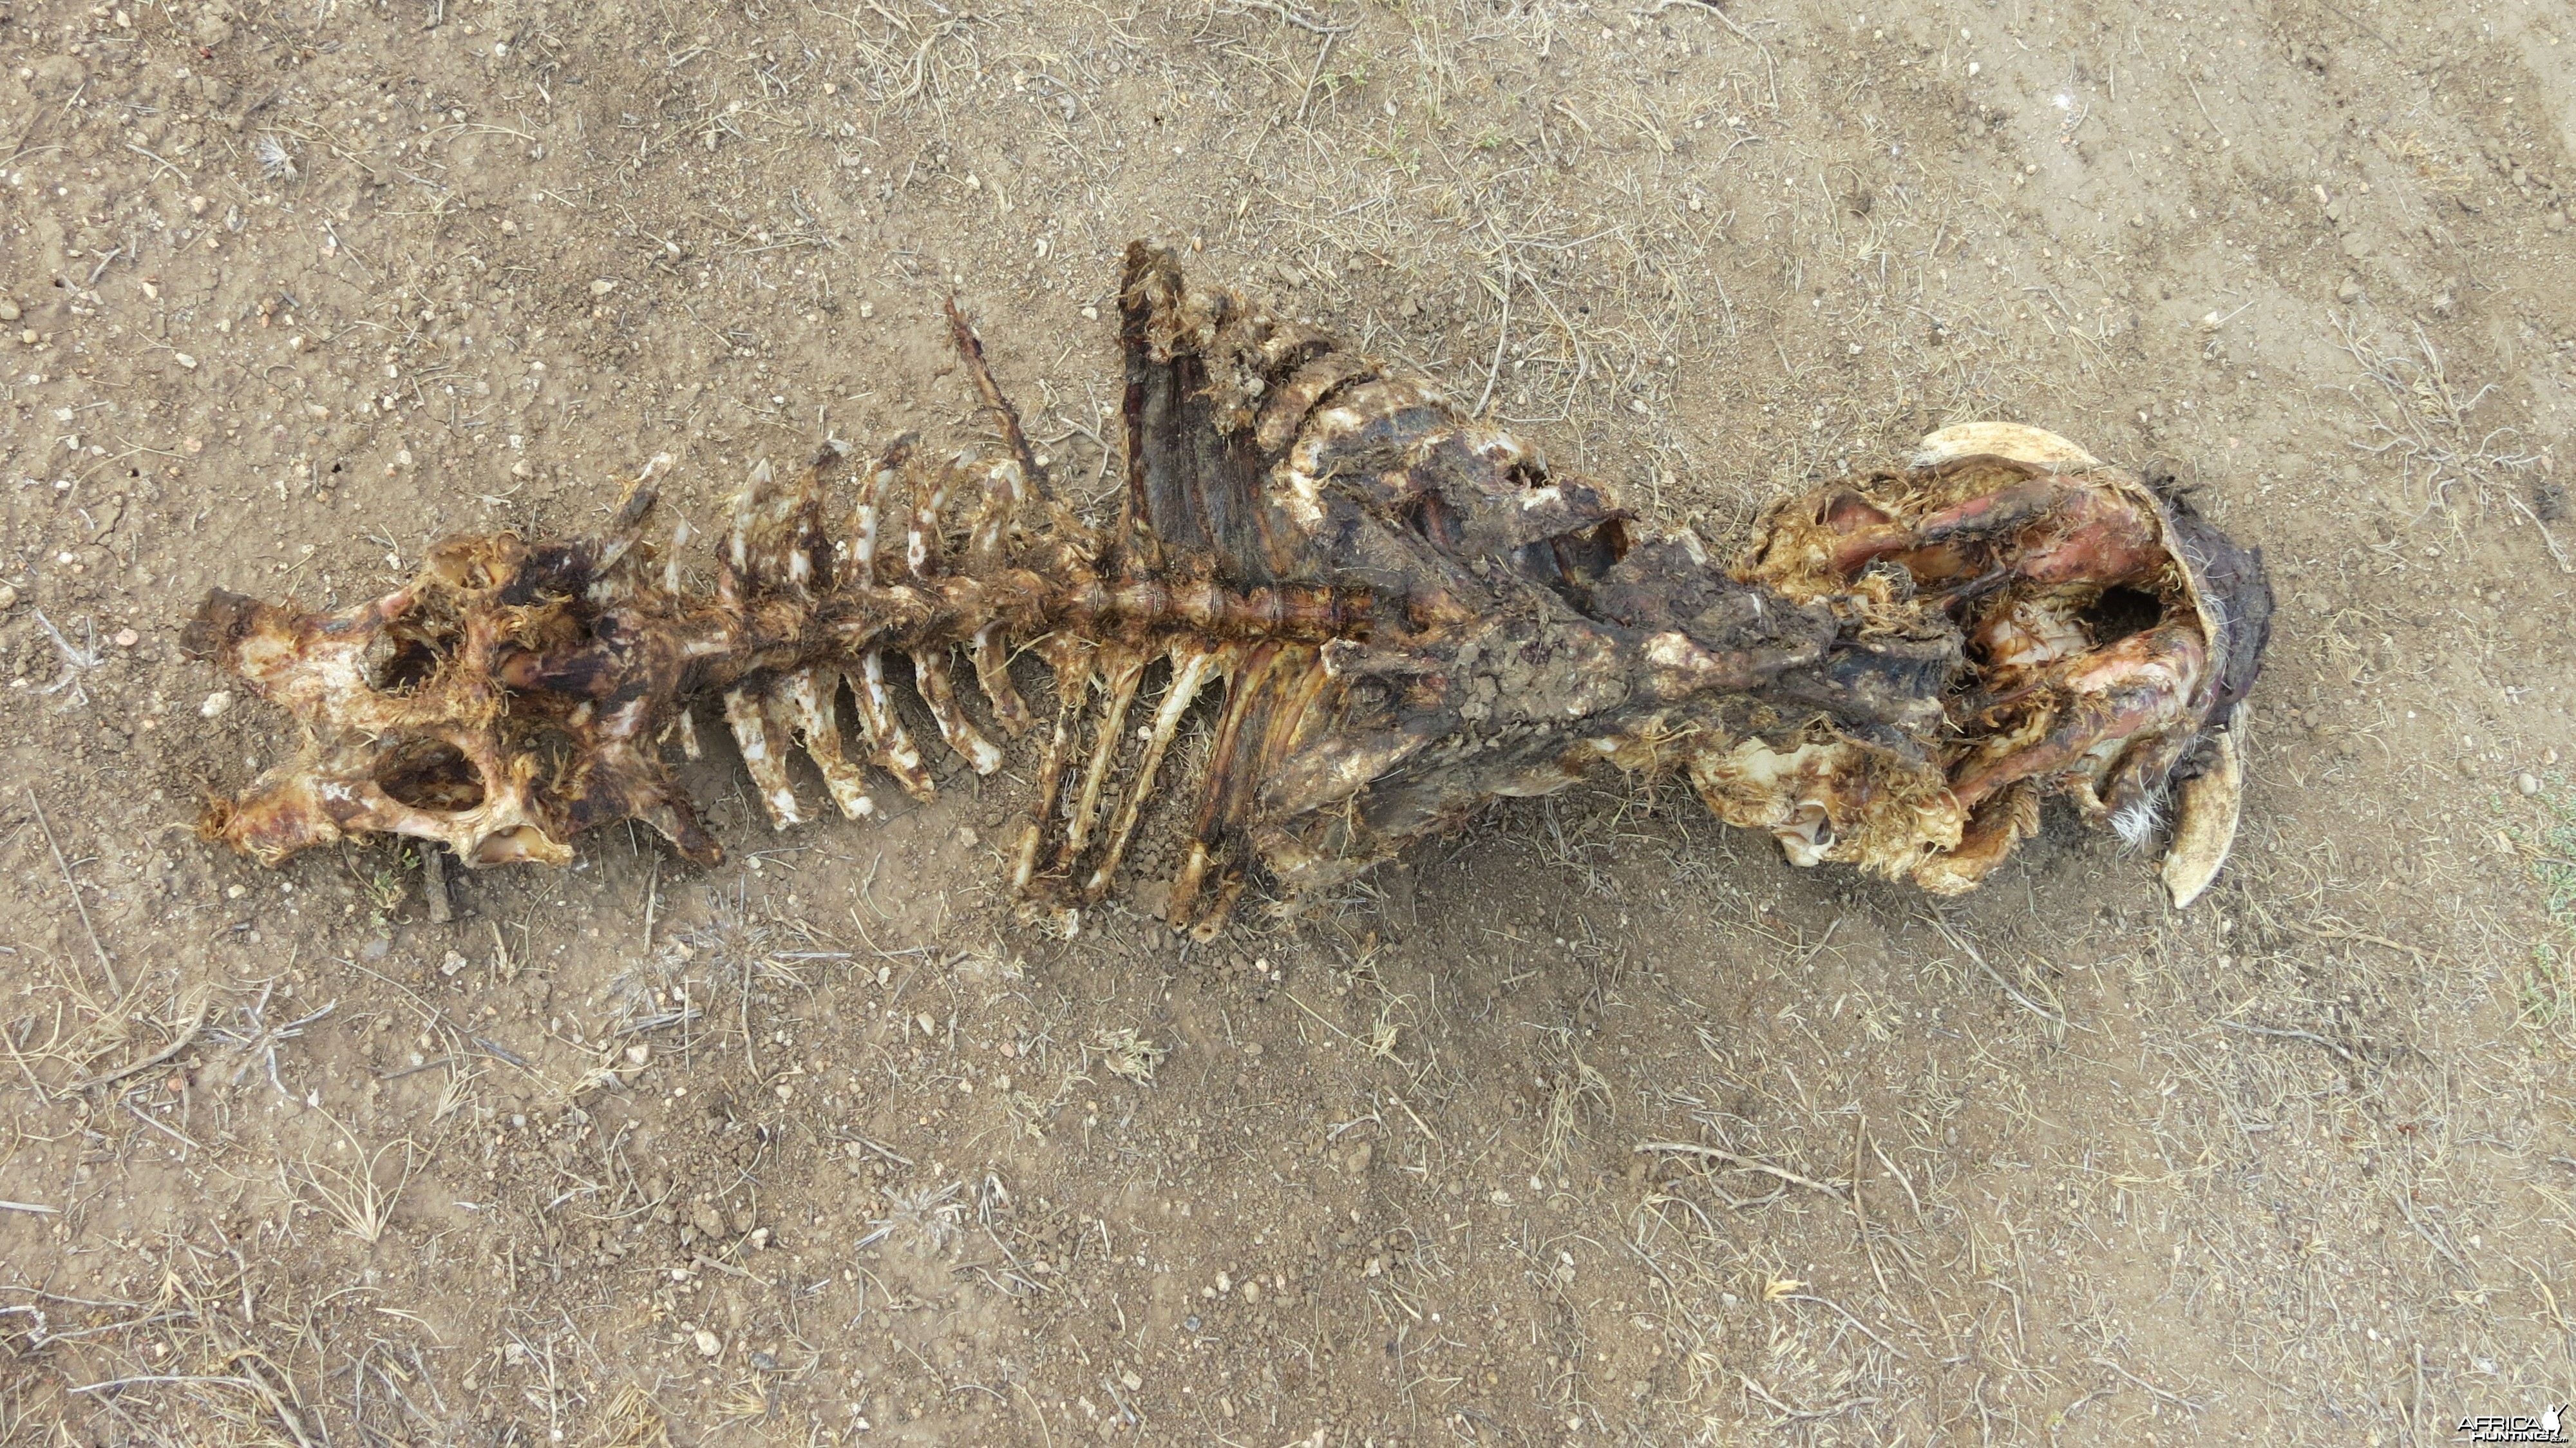 Warthog Carcass Namibia